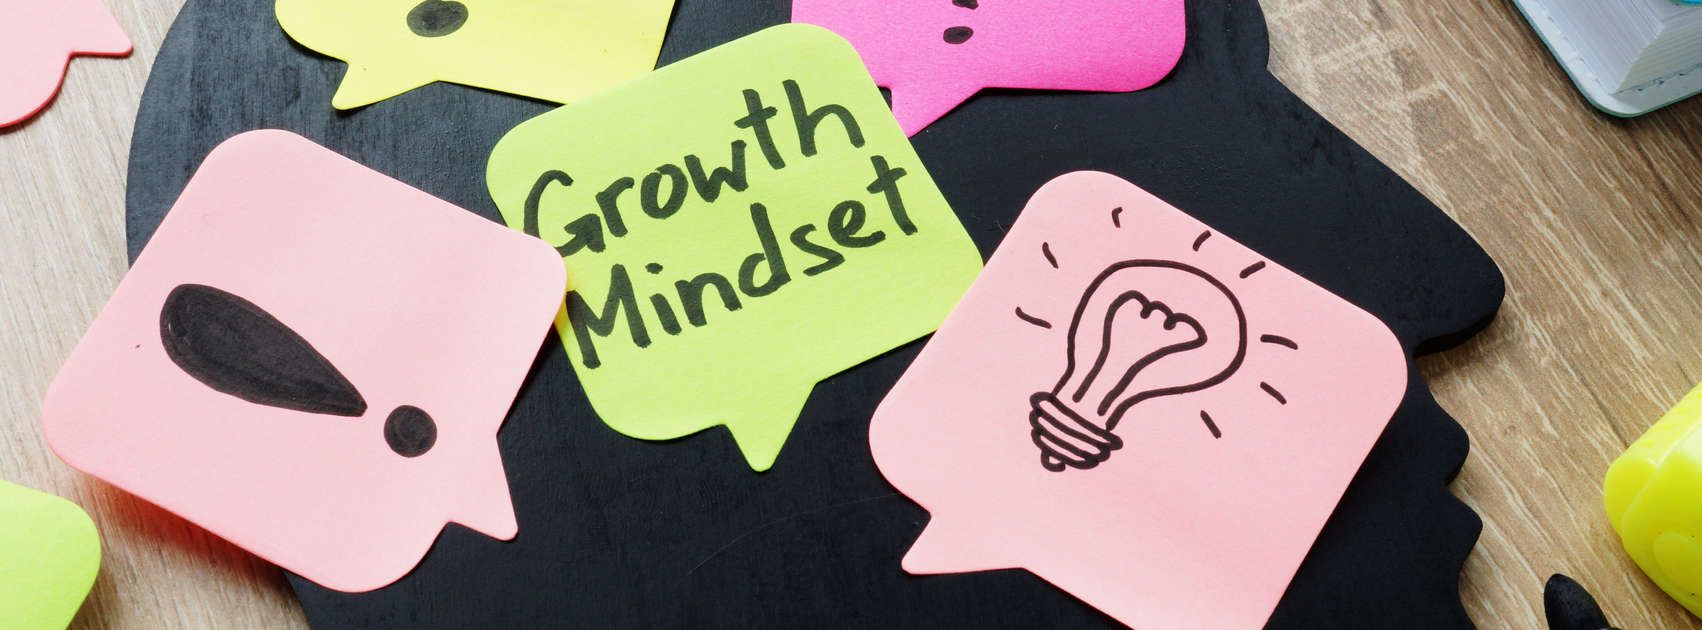 Growth mindset on sitcky notes